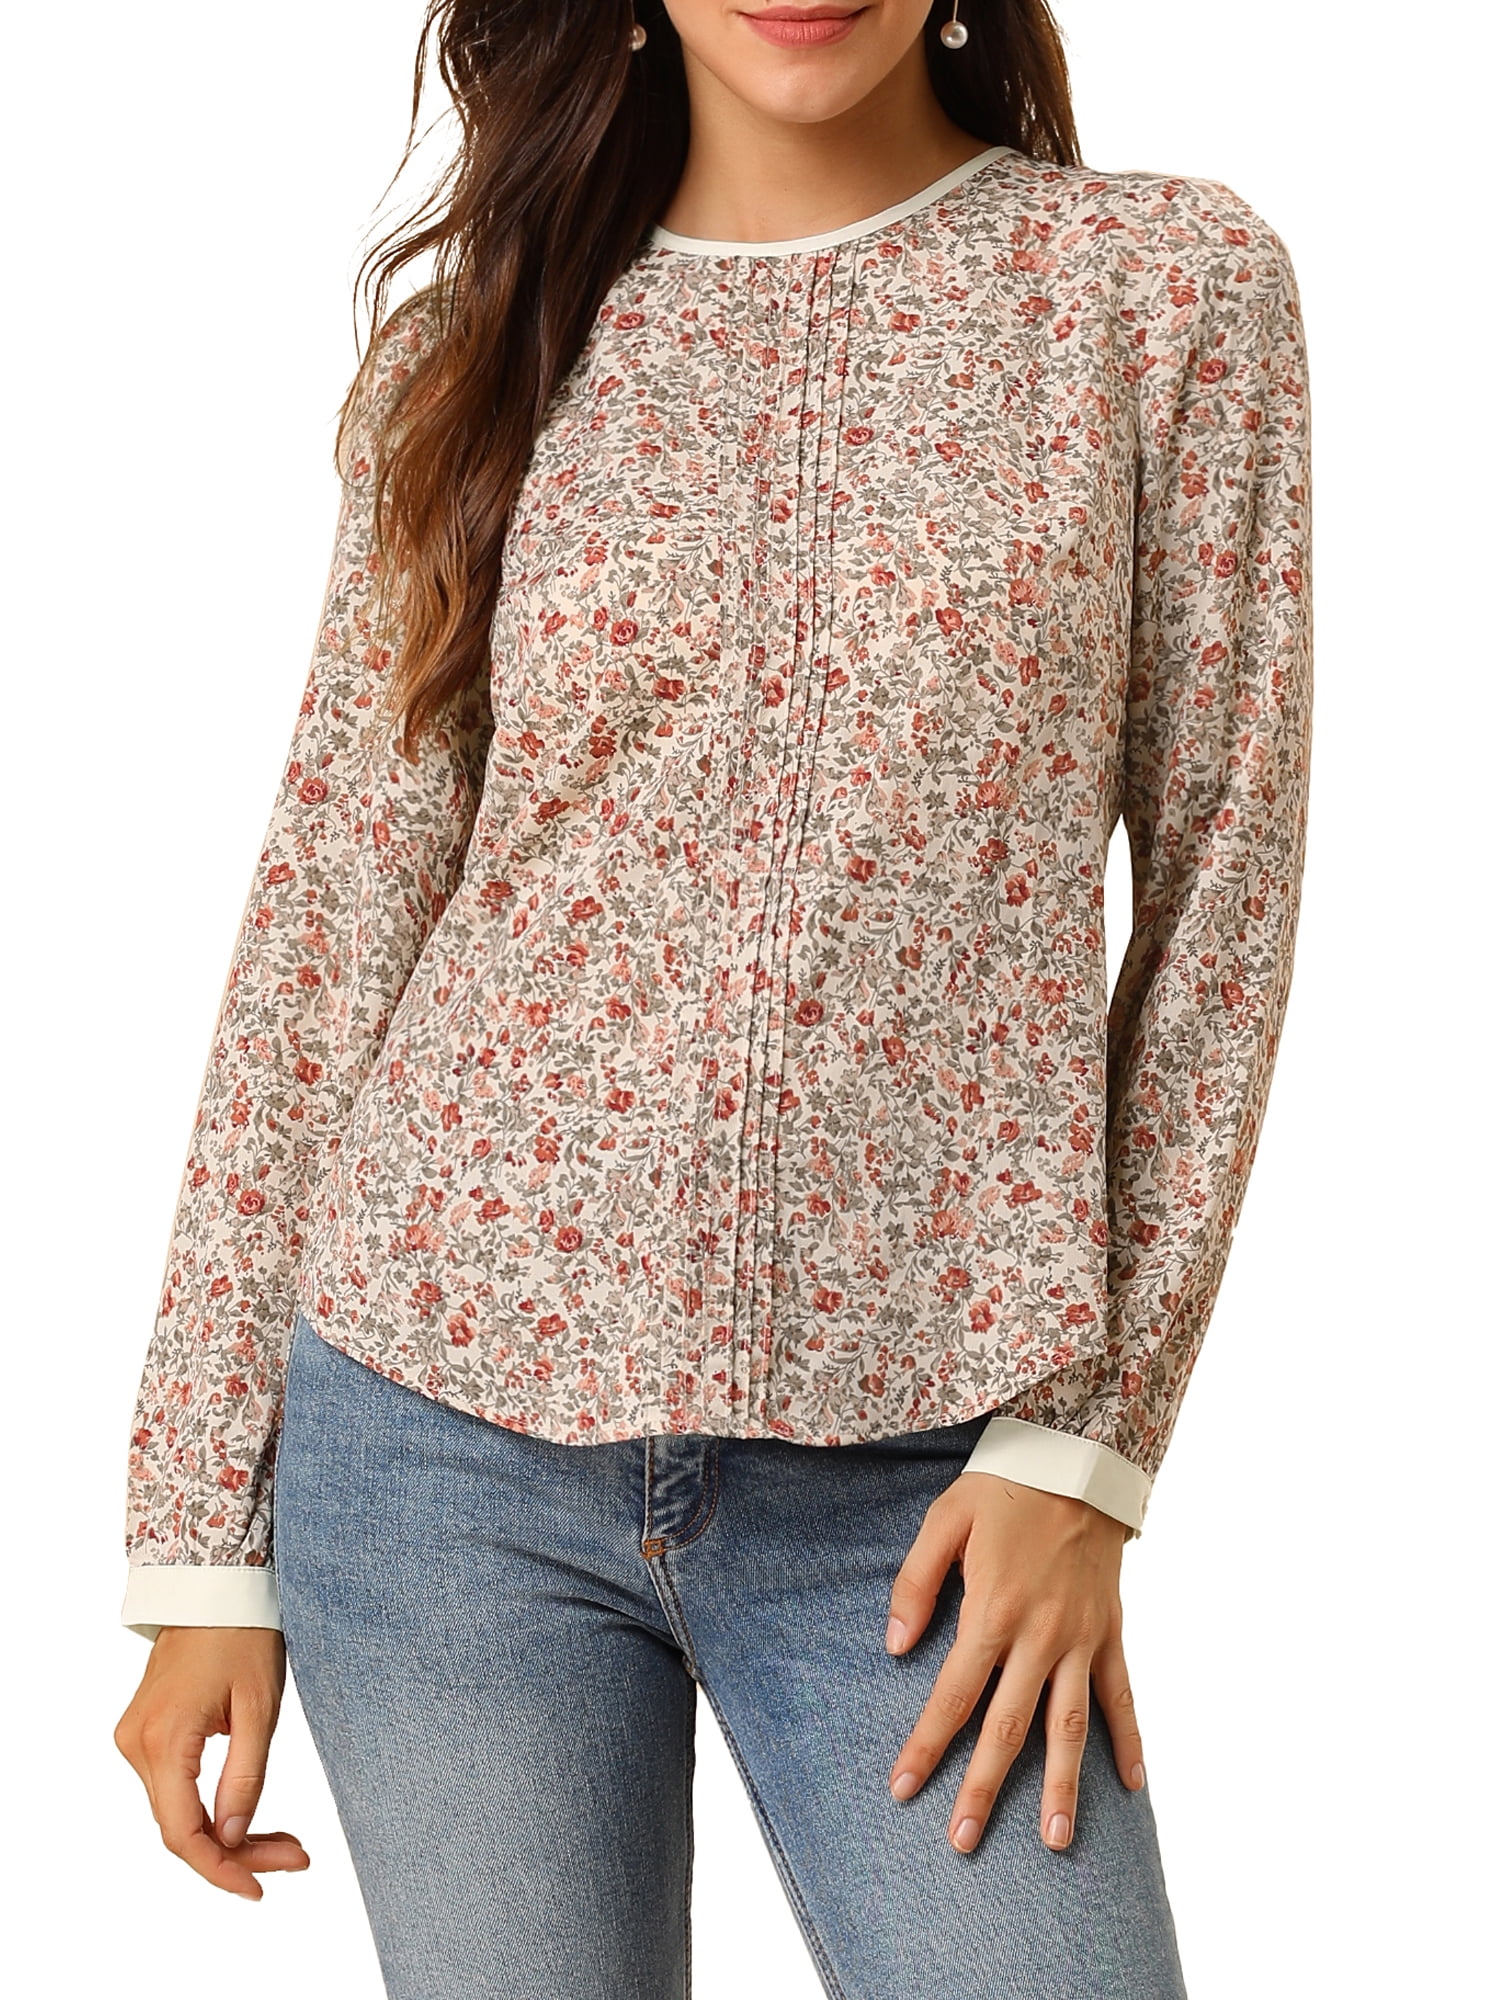 BCDshop 2018 Fashion!Women Sleeveless Button Pleated Floral Print Tunic Tops Shirt Blouse 